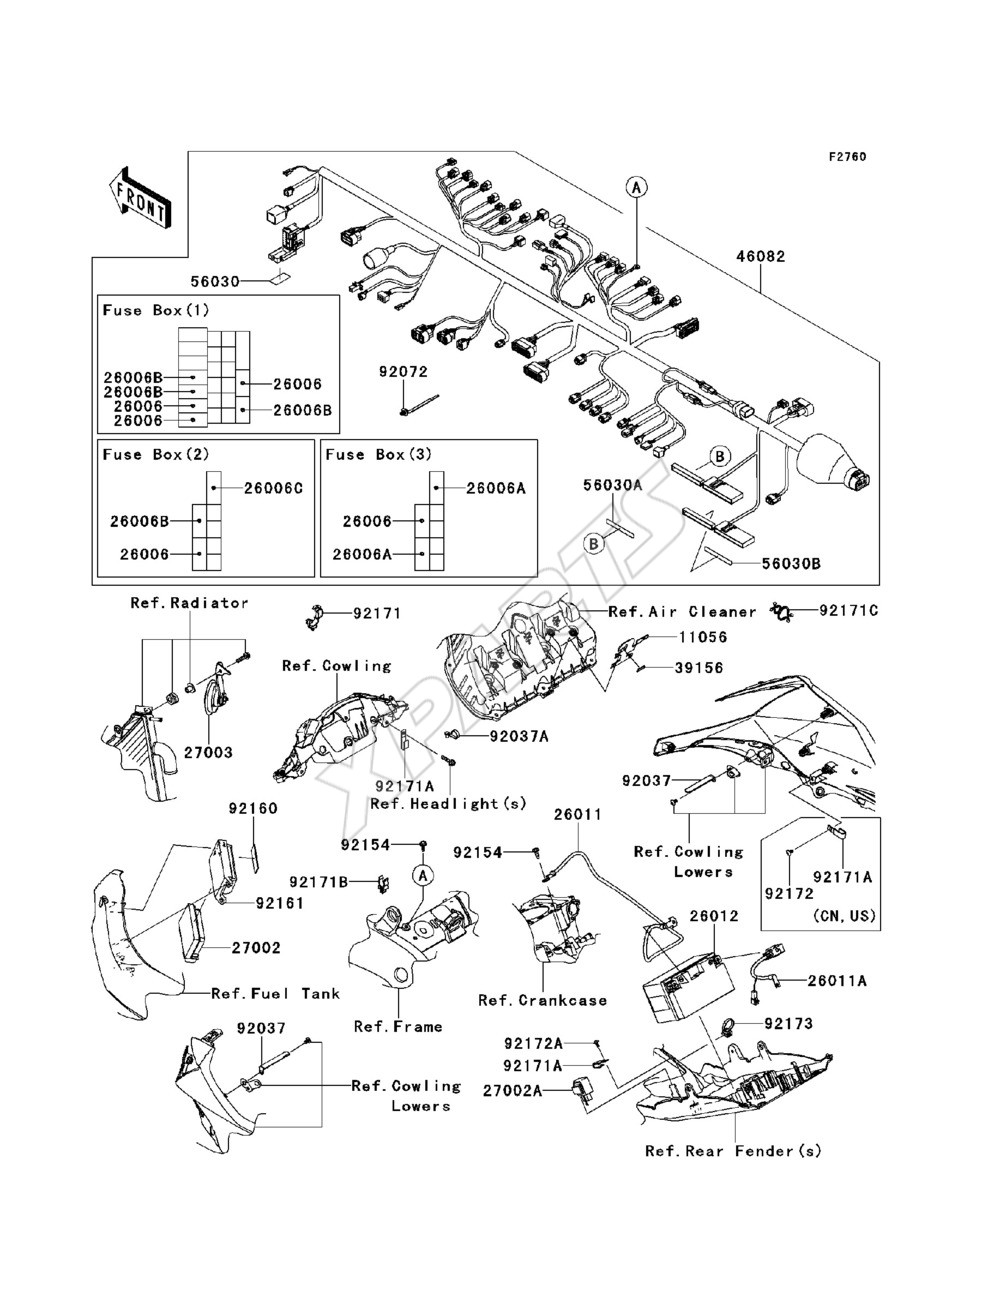 Bild für Kategorie Chassis Electrical Equipment(KBF)